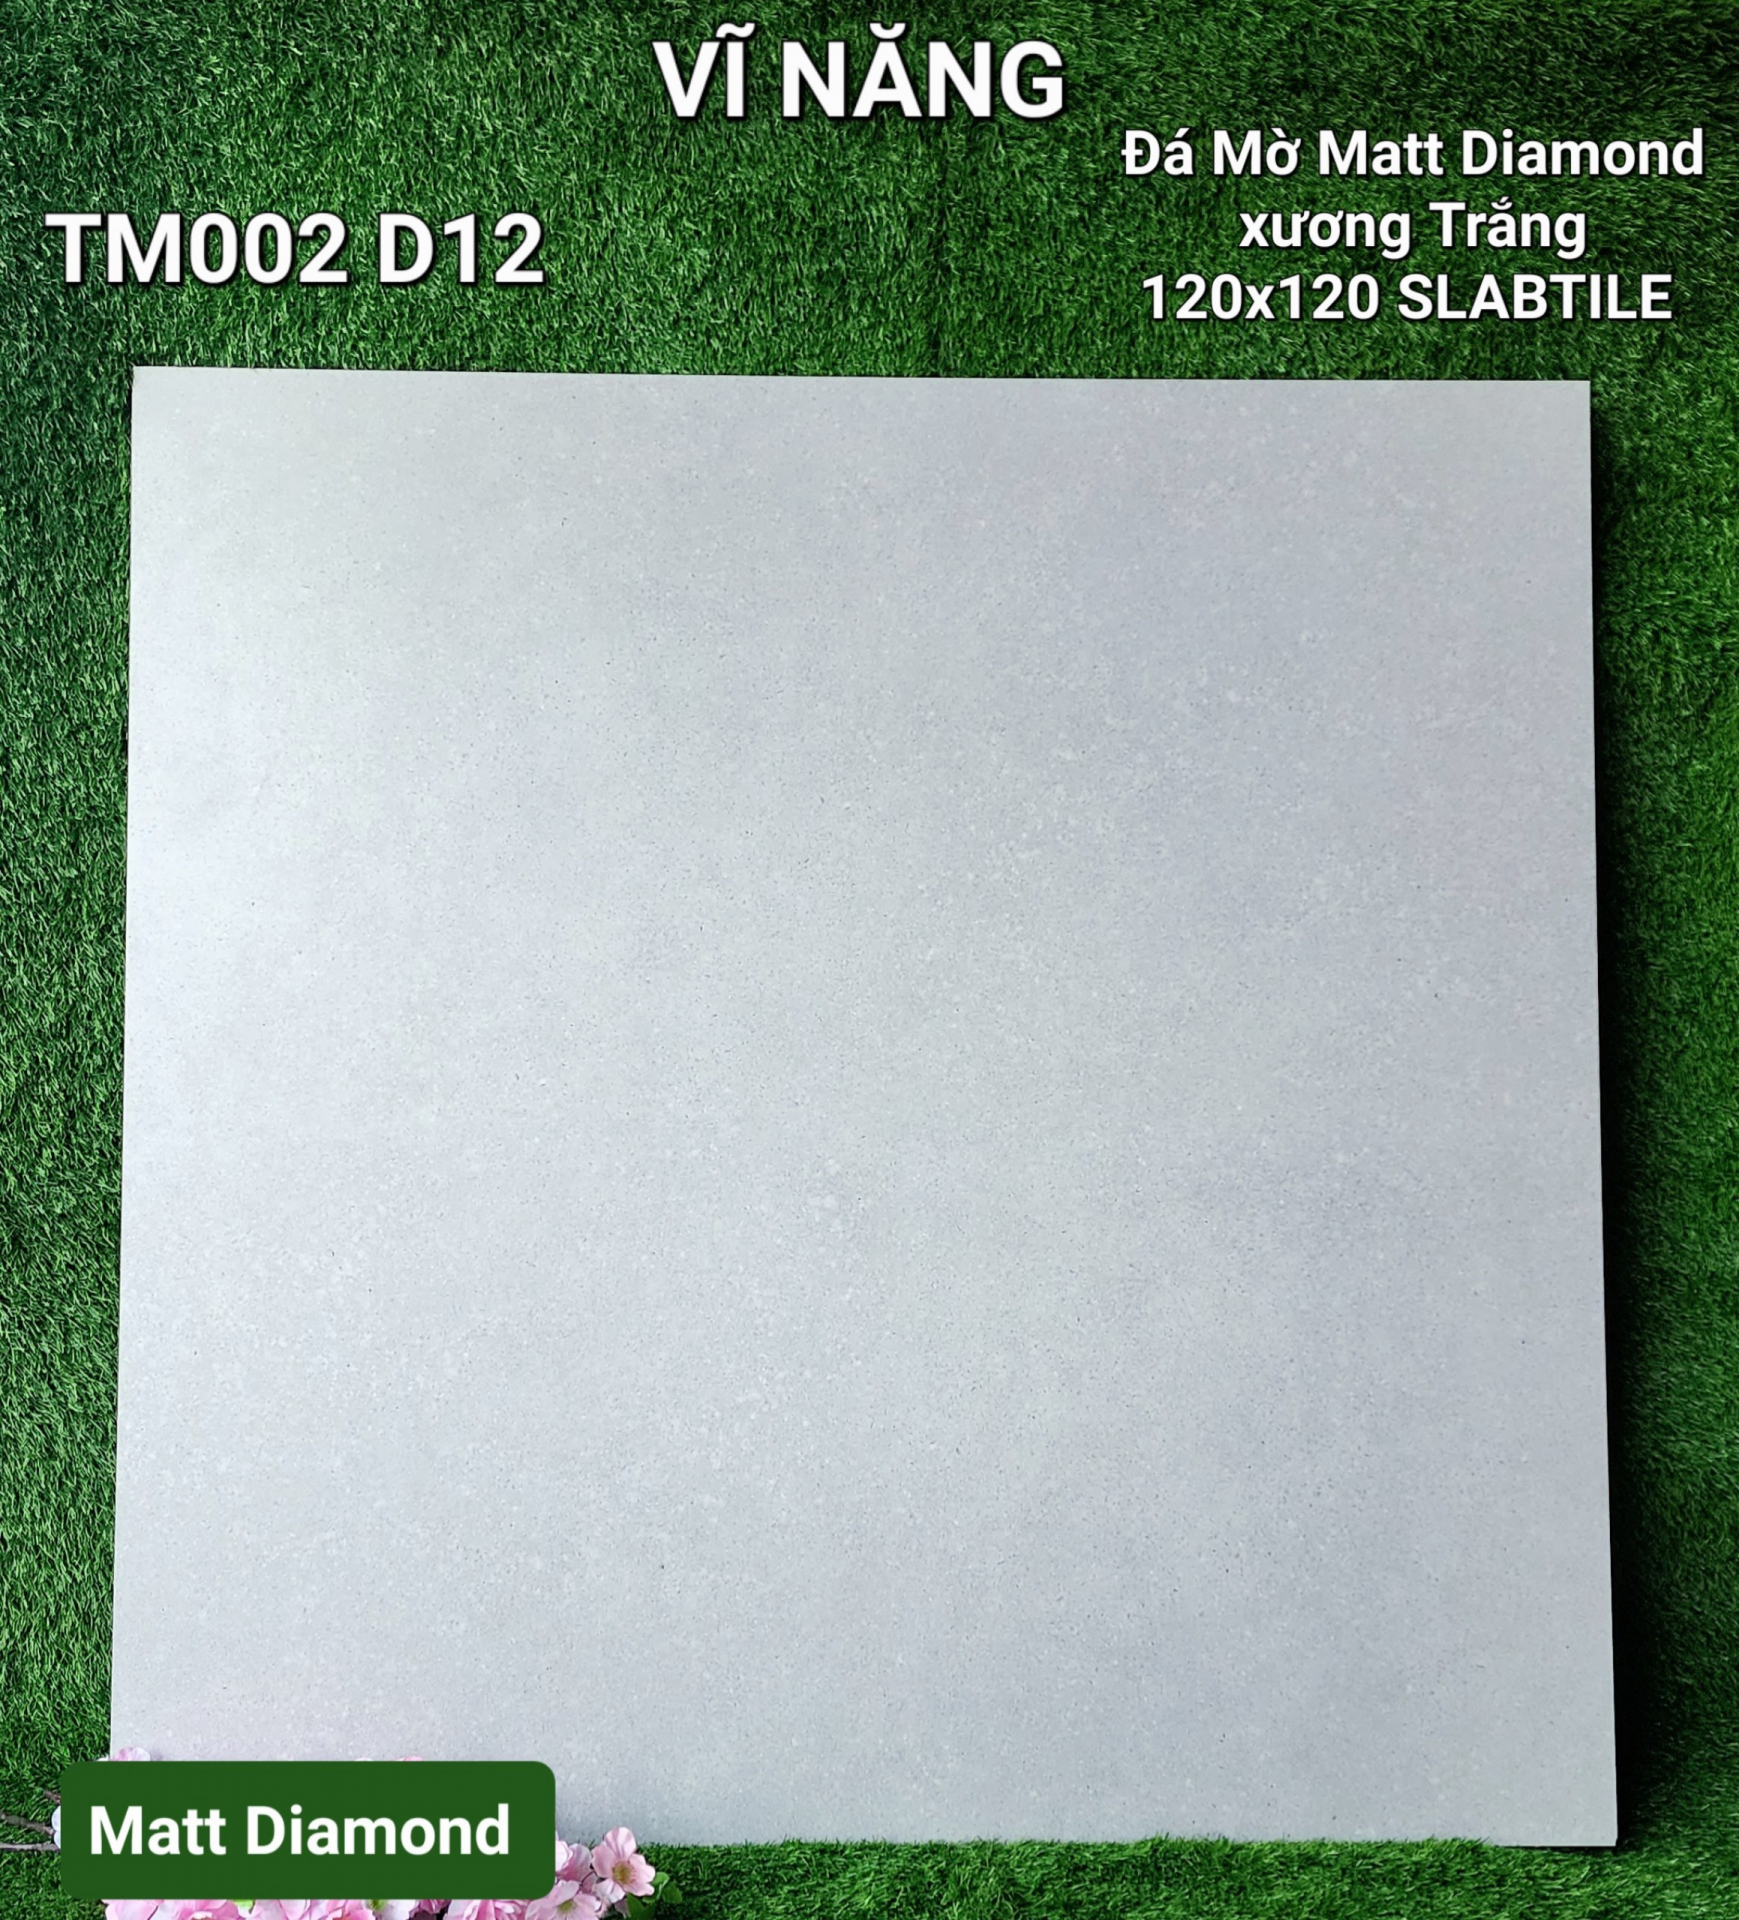 Đá Matt DIAMOND Xương Trắng 120x120